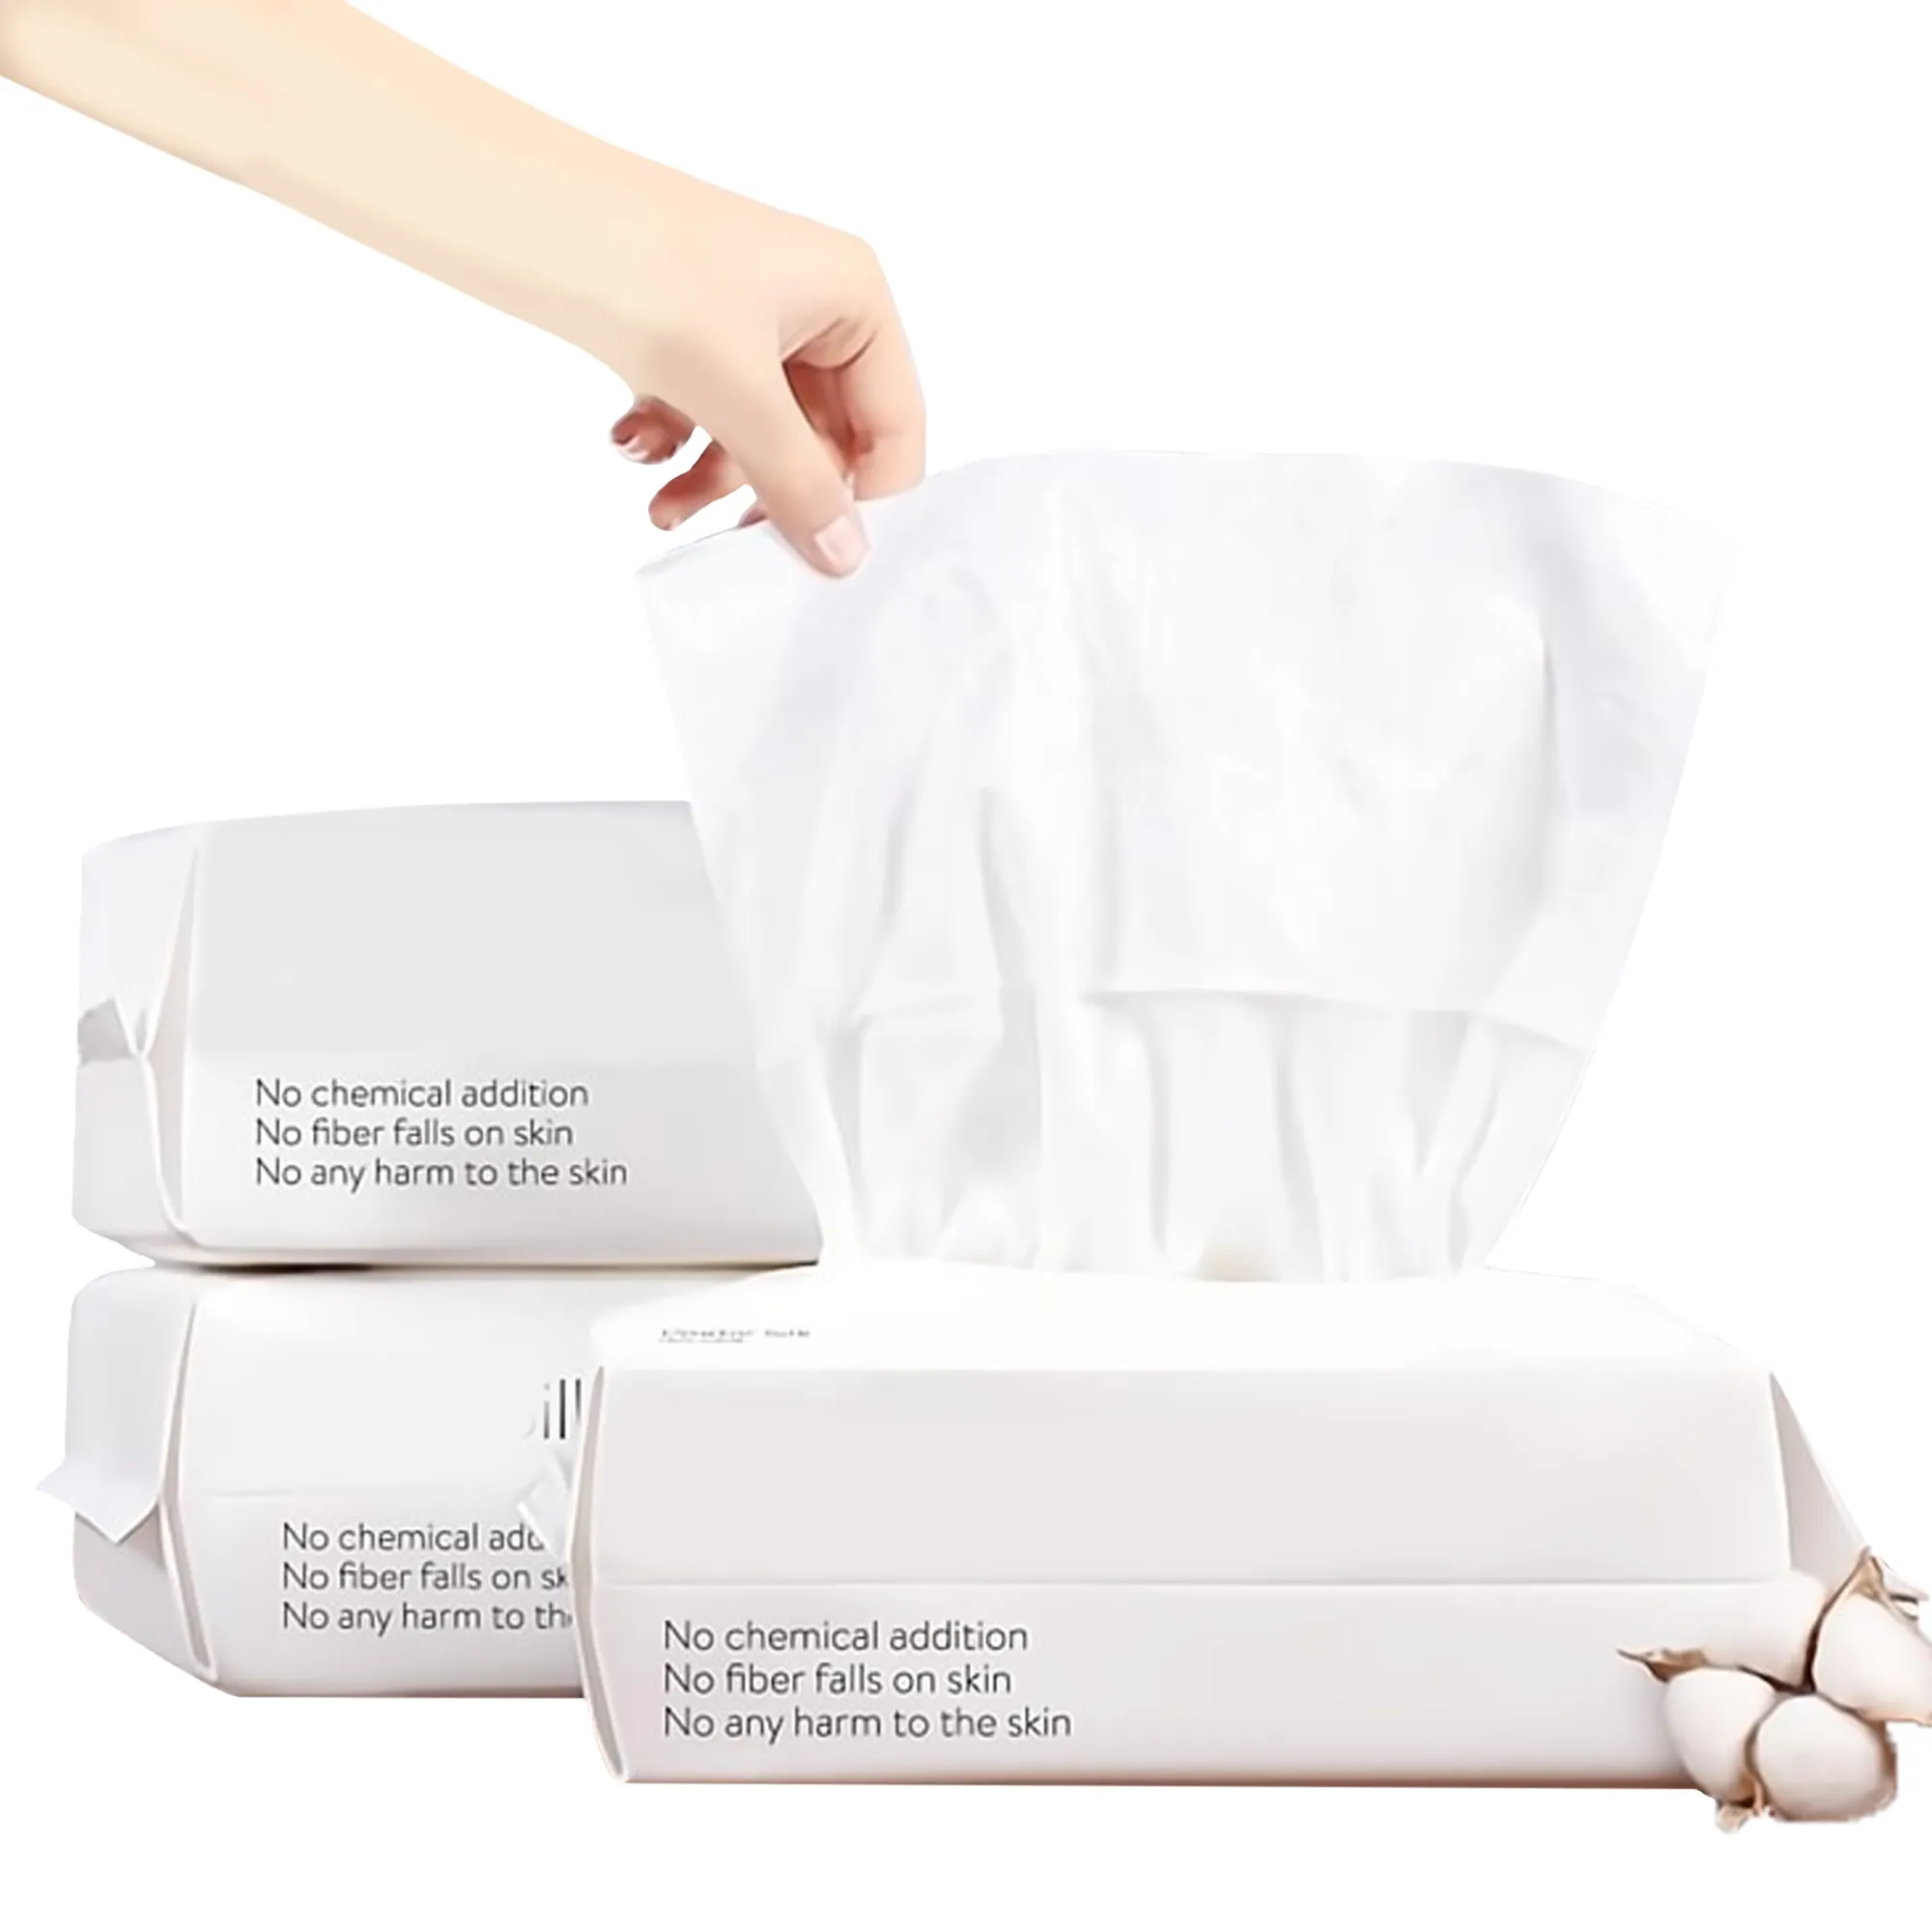 XTRA-toalla facial Suave para adultos, pañuelos faciales de algodón para limpieza diaria